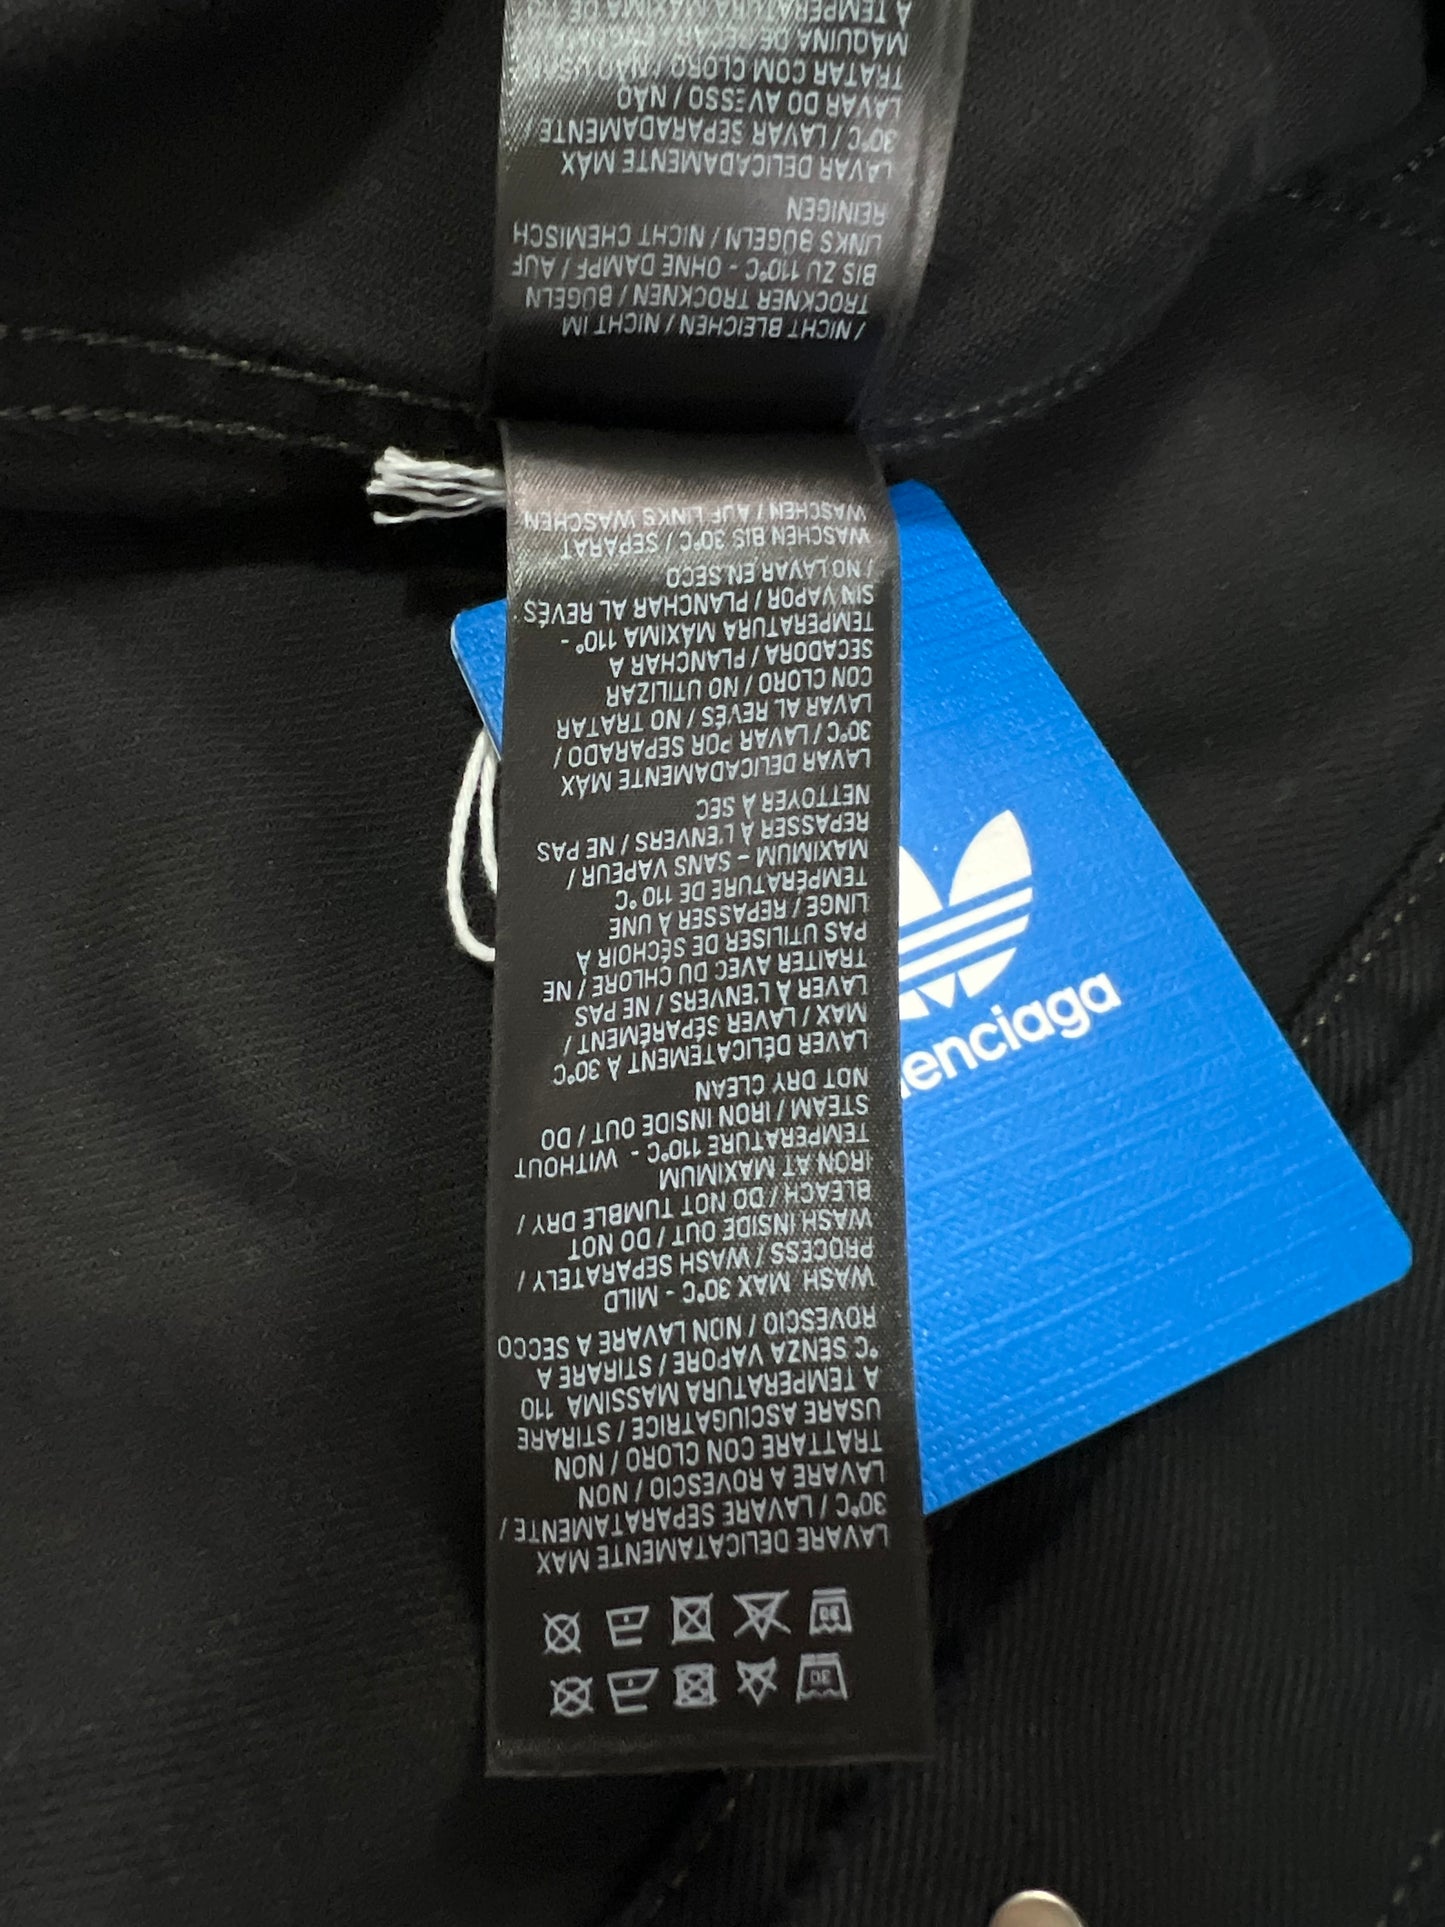 Balenciaga x Adidas denim Jacket black SZ:1